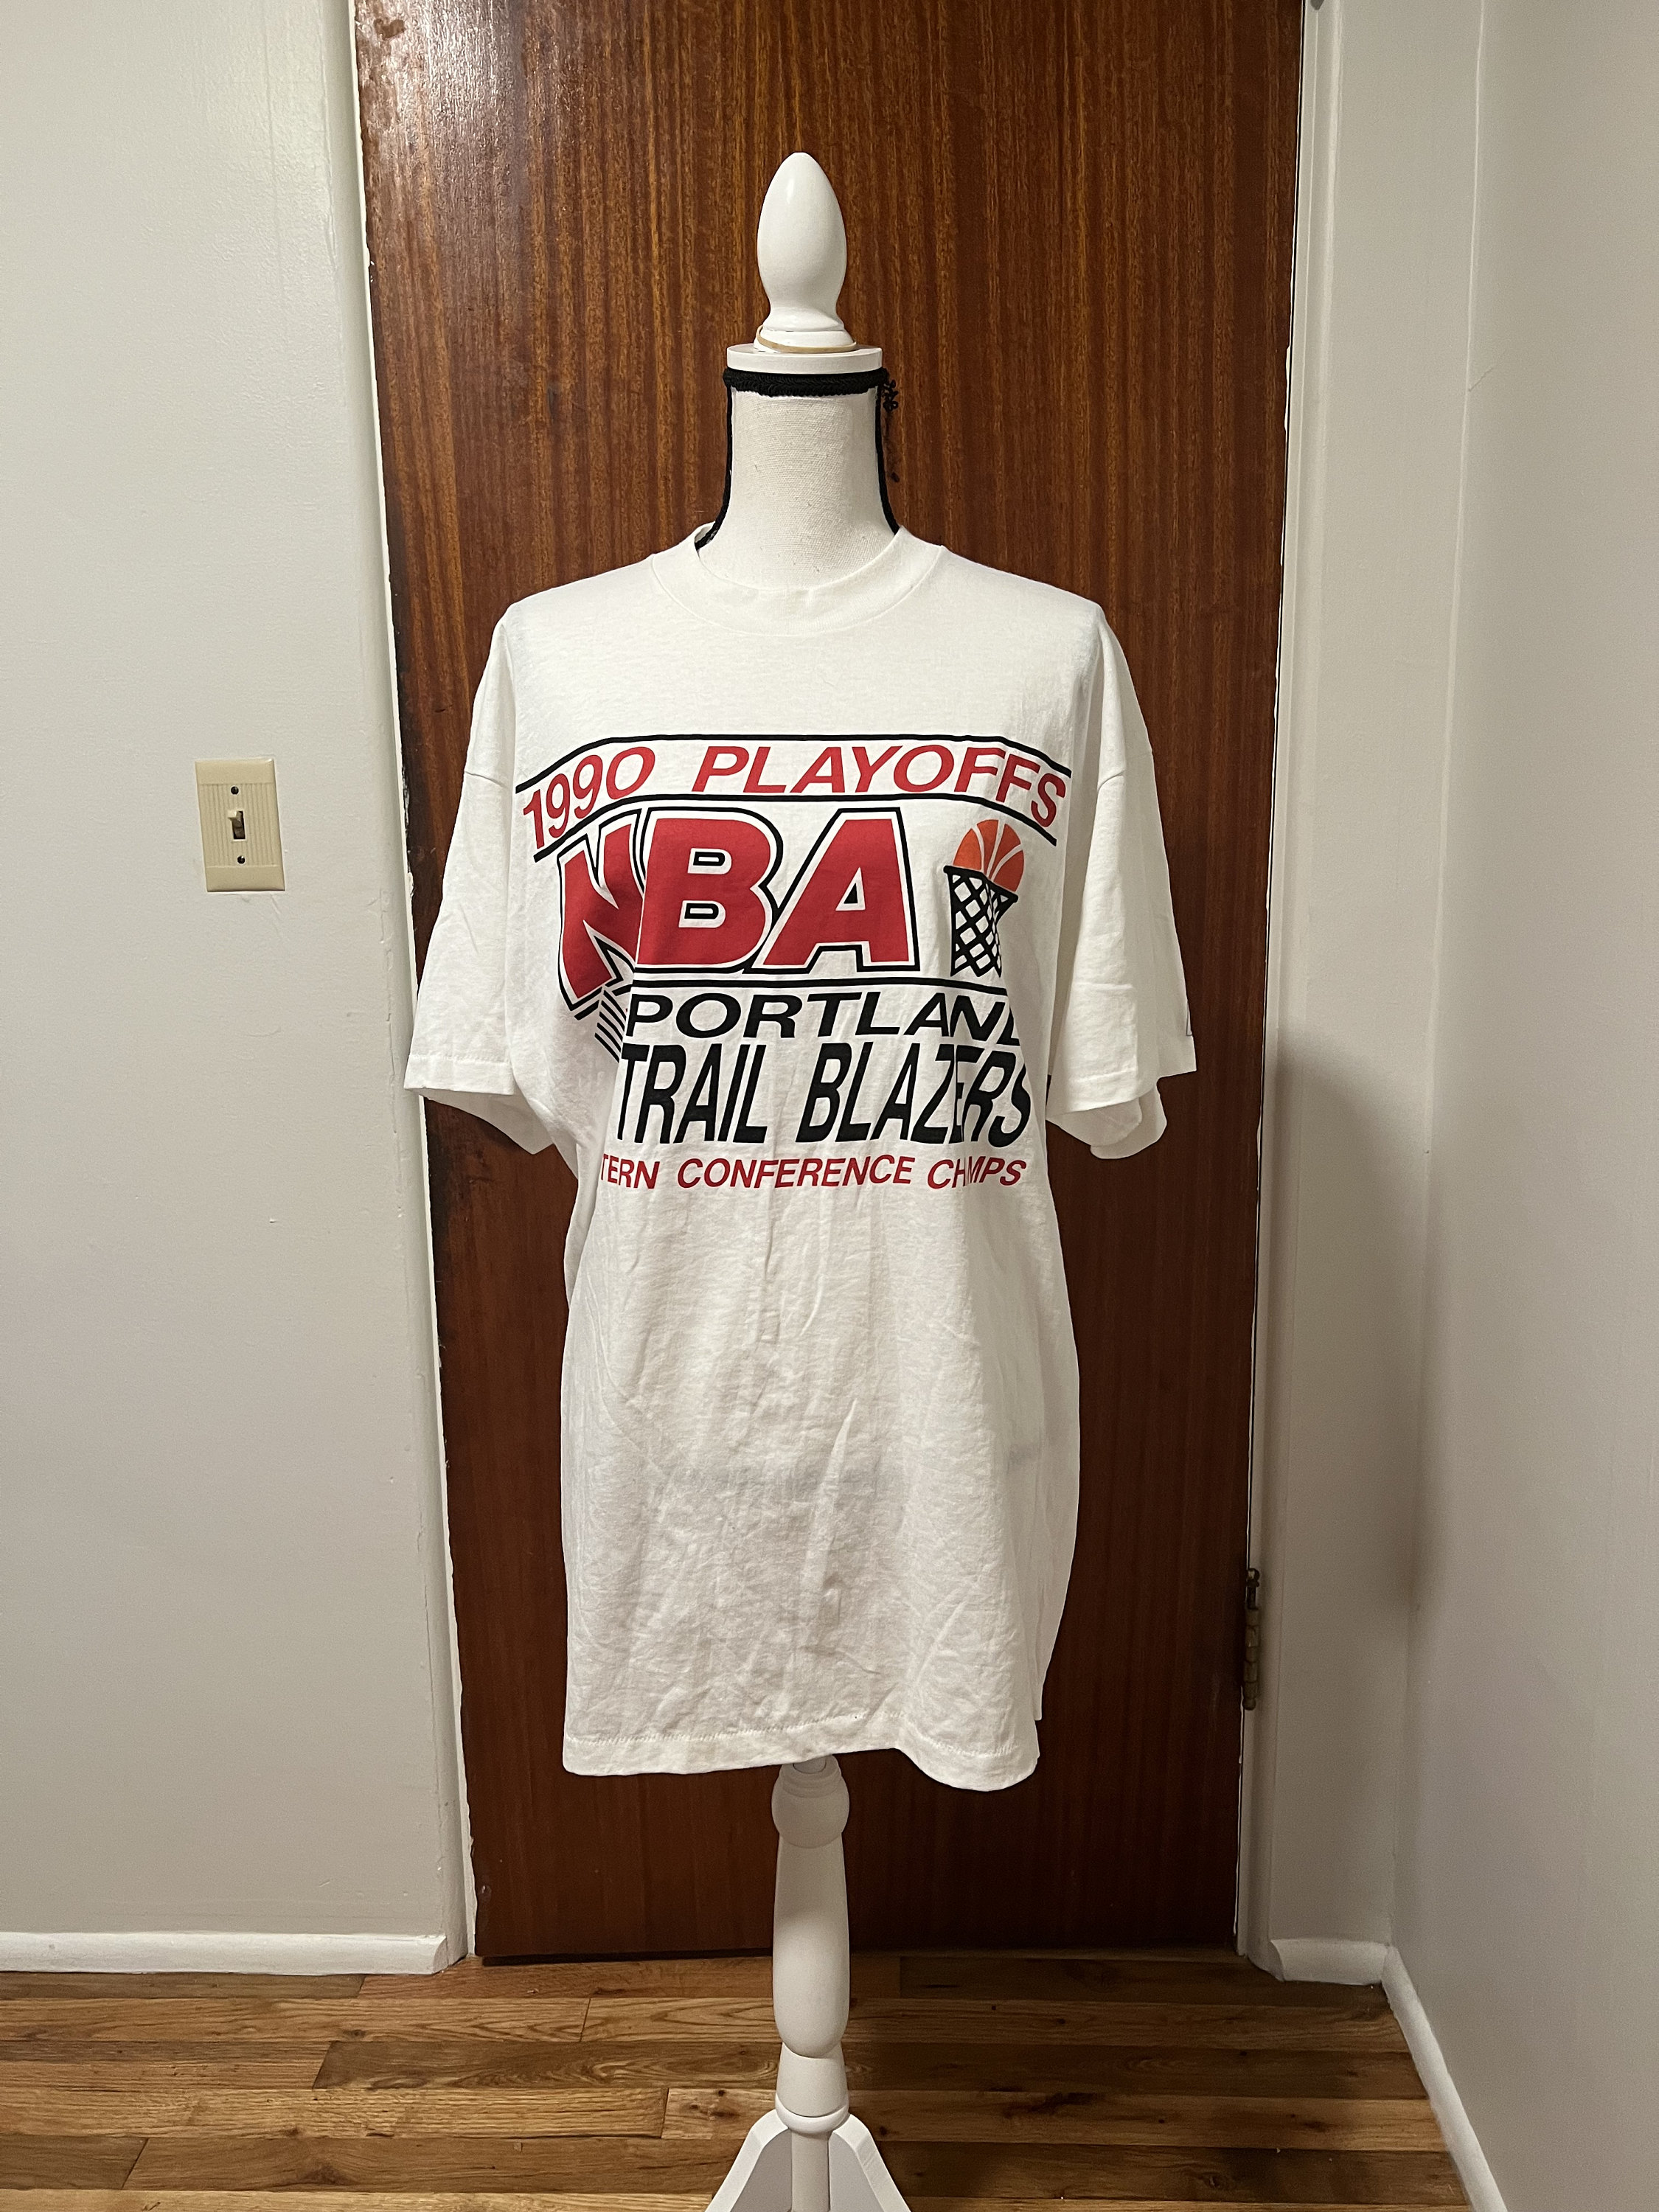 adidas, Shirts, Rudy Fernandez Portland Trailblazers Blazers Nba  Basketball Jersey Adidas Xl 5